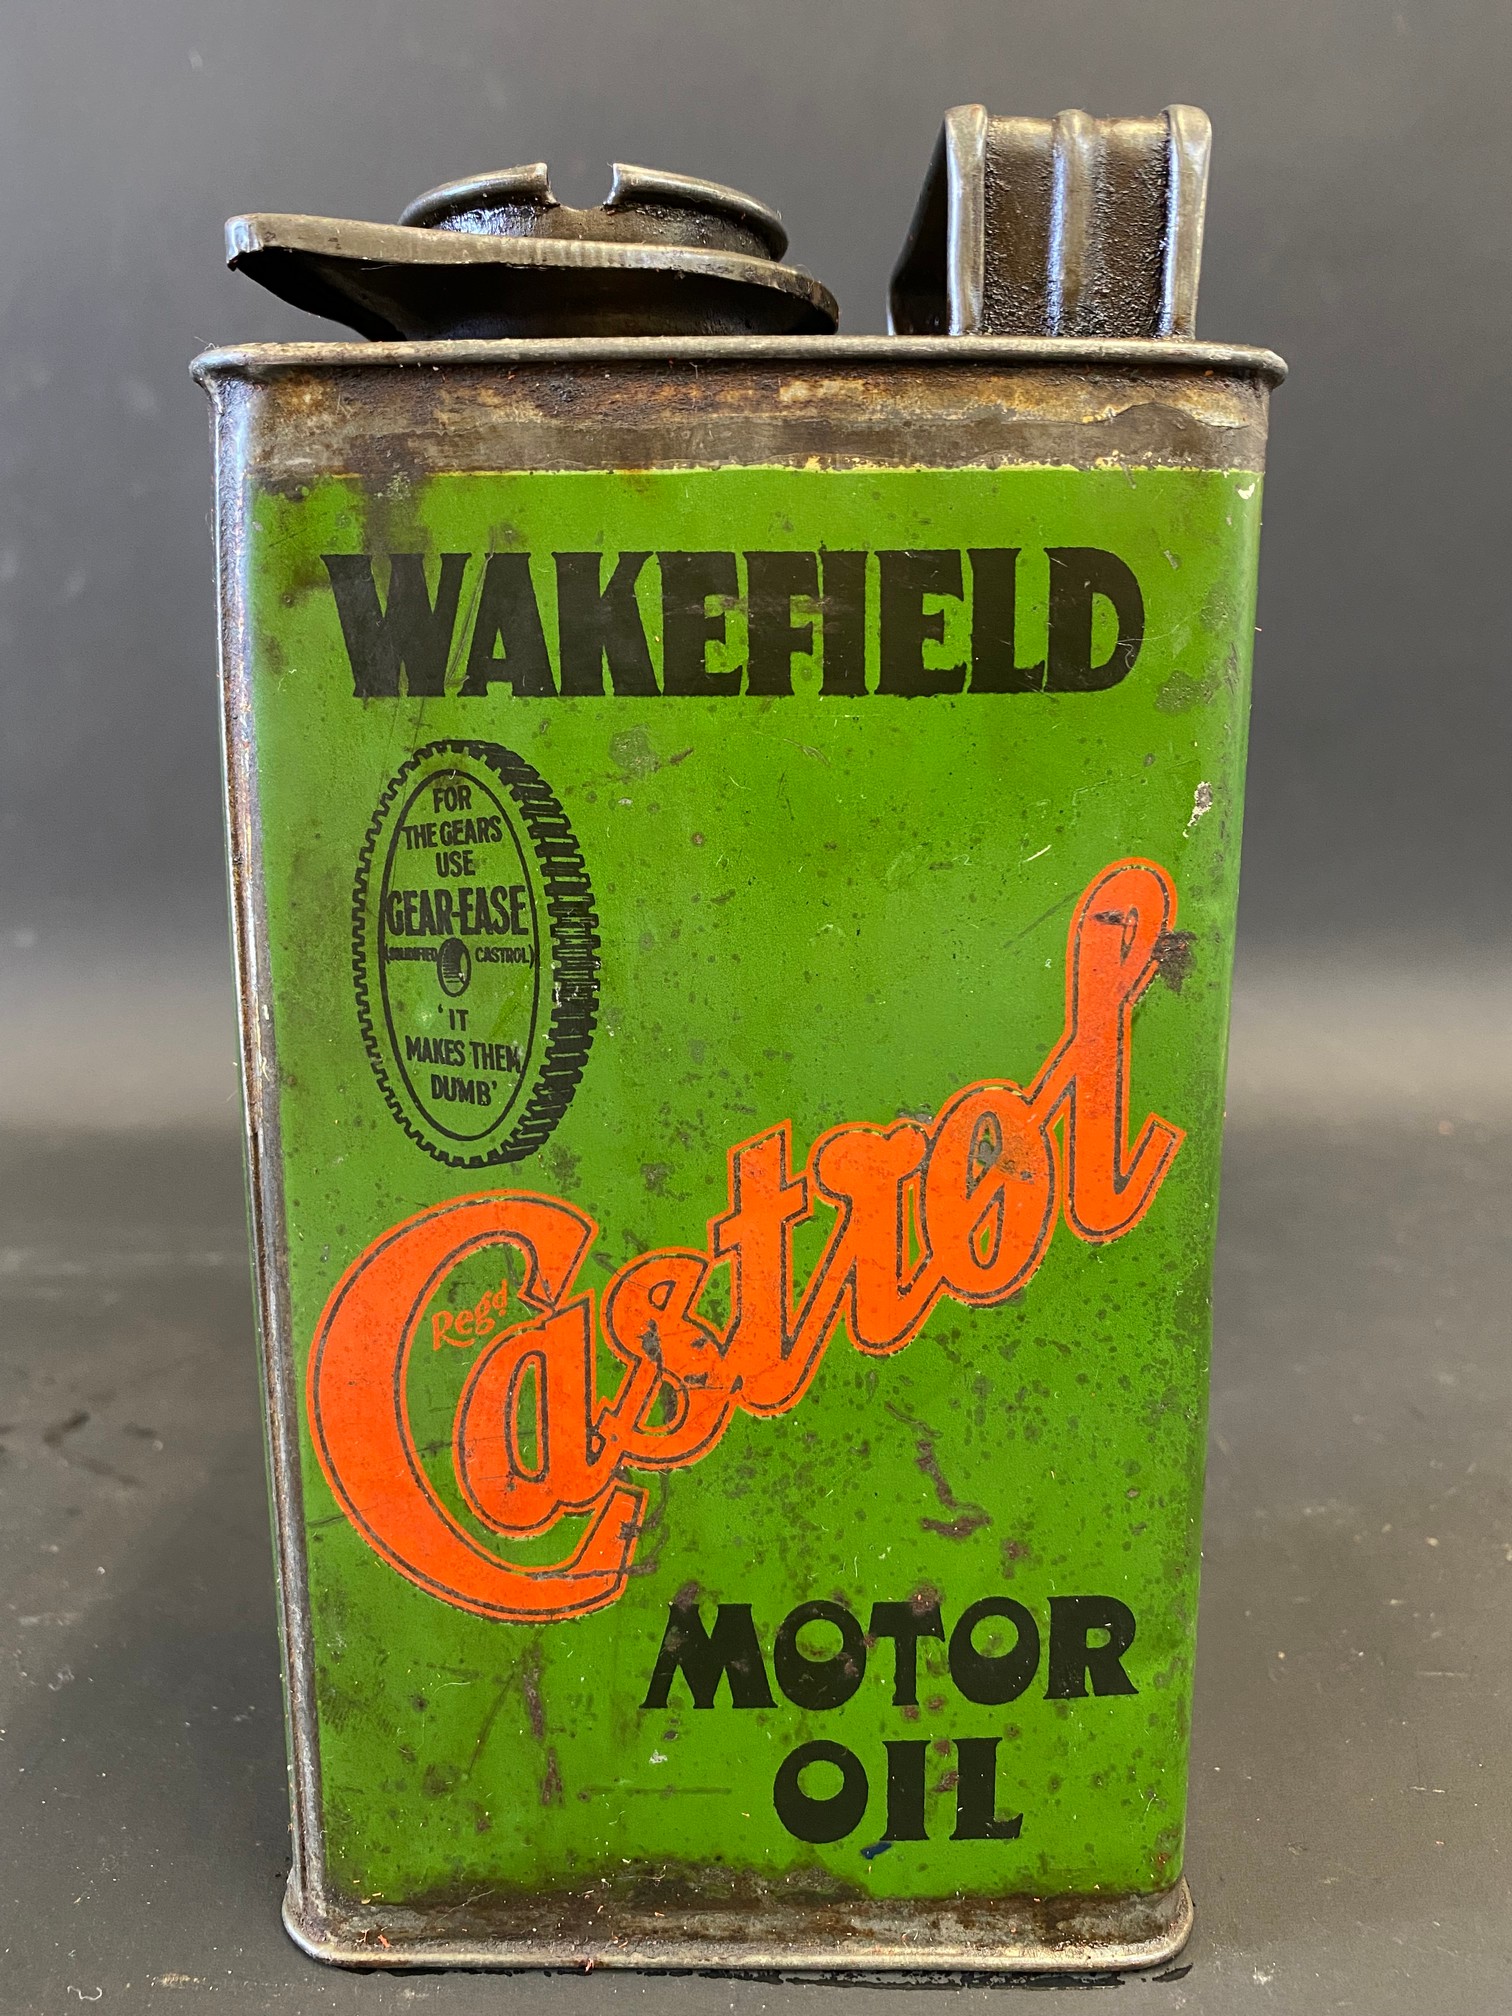 A Wakefield Castrol Gear-Ease Motor Oil rectangular quart can.